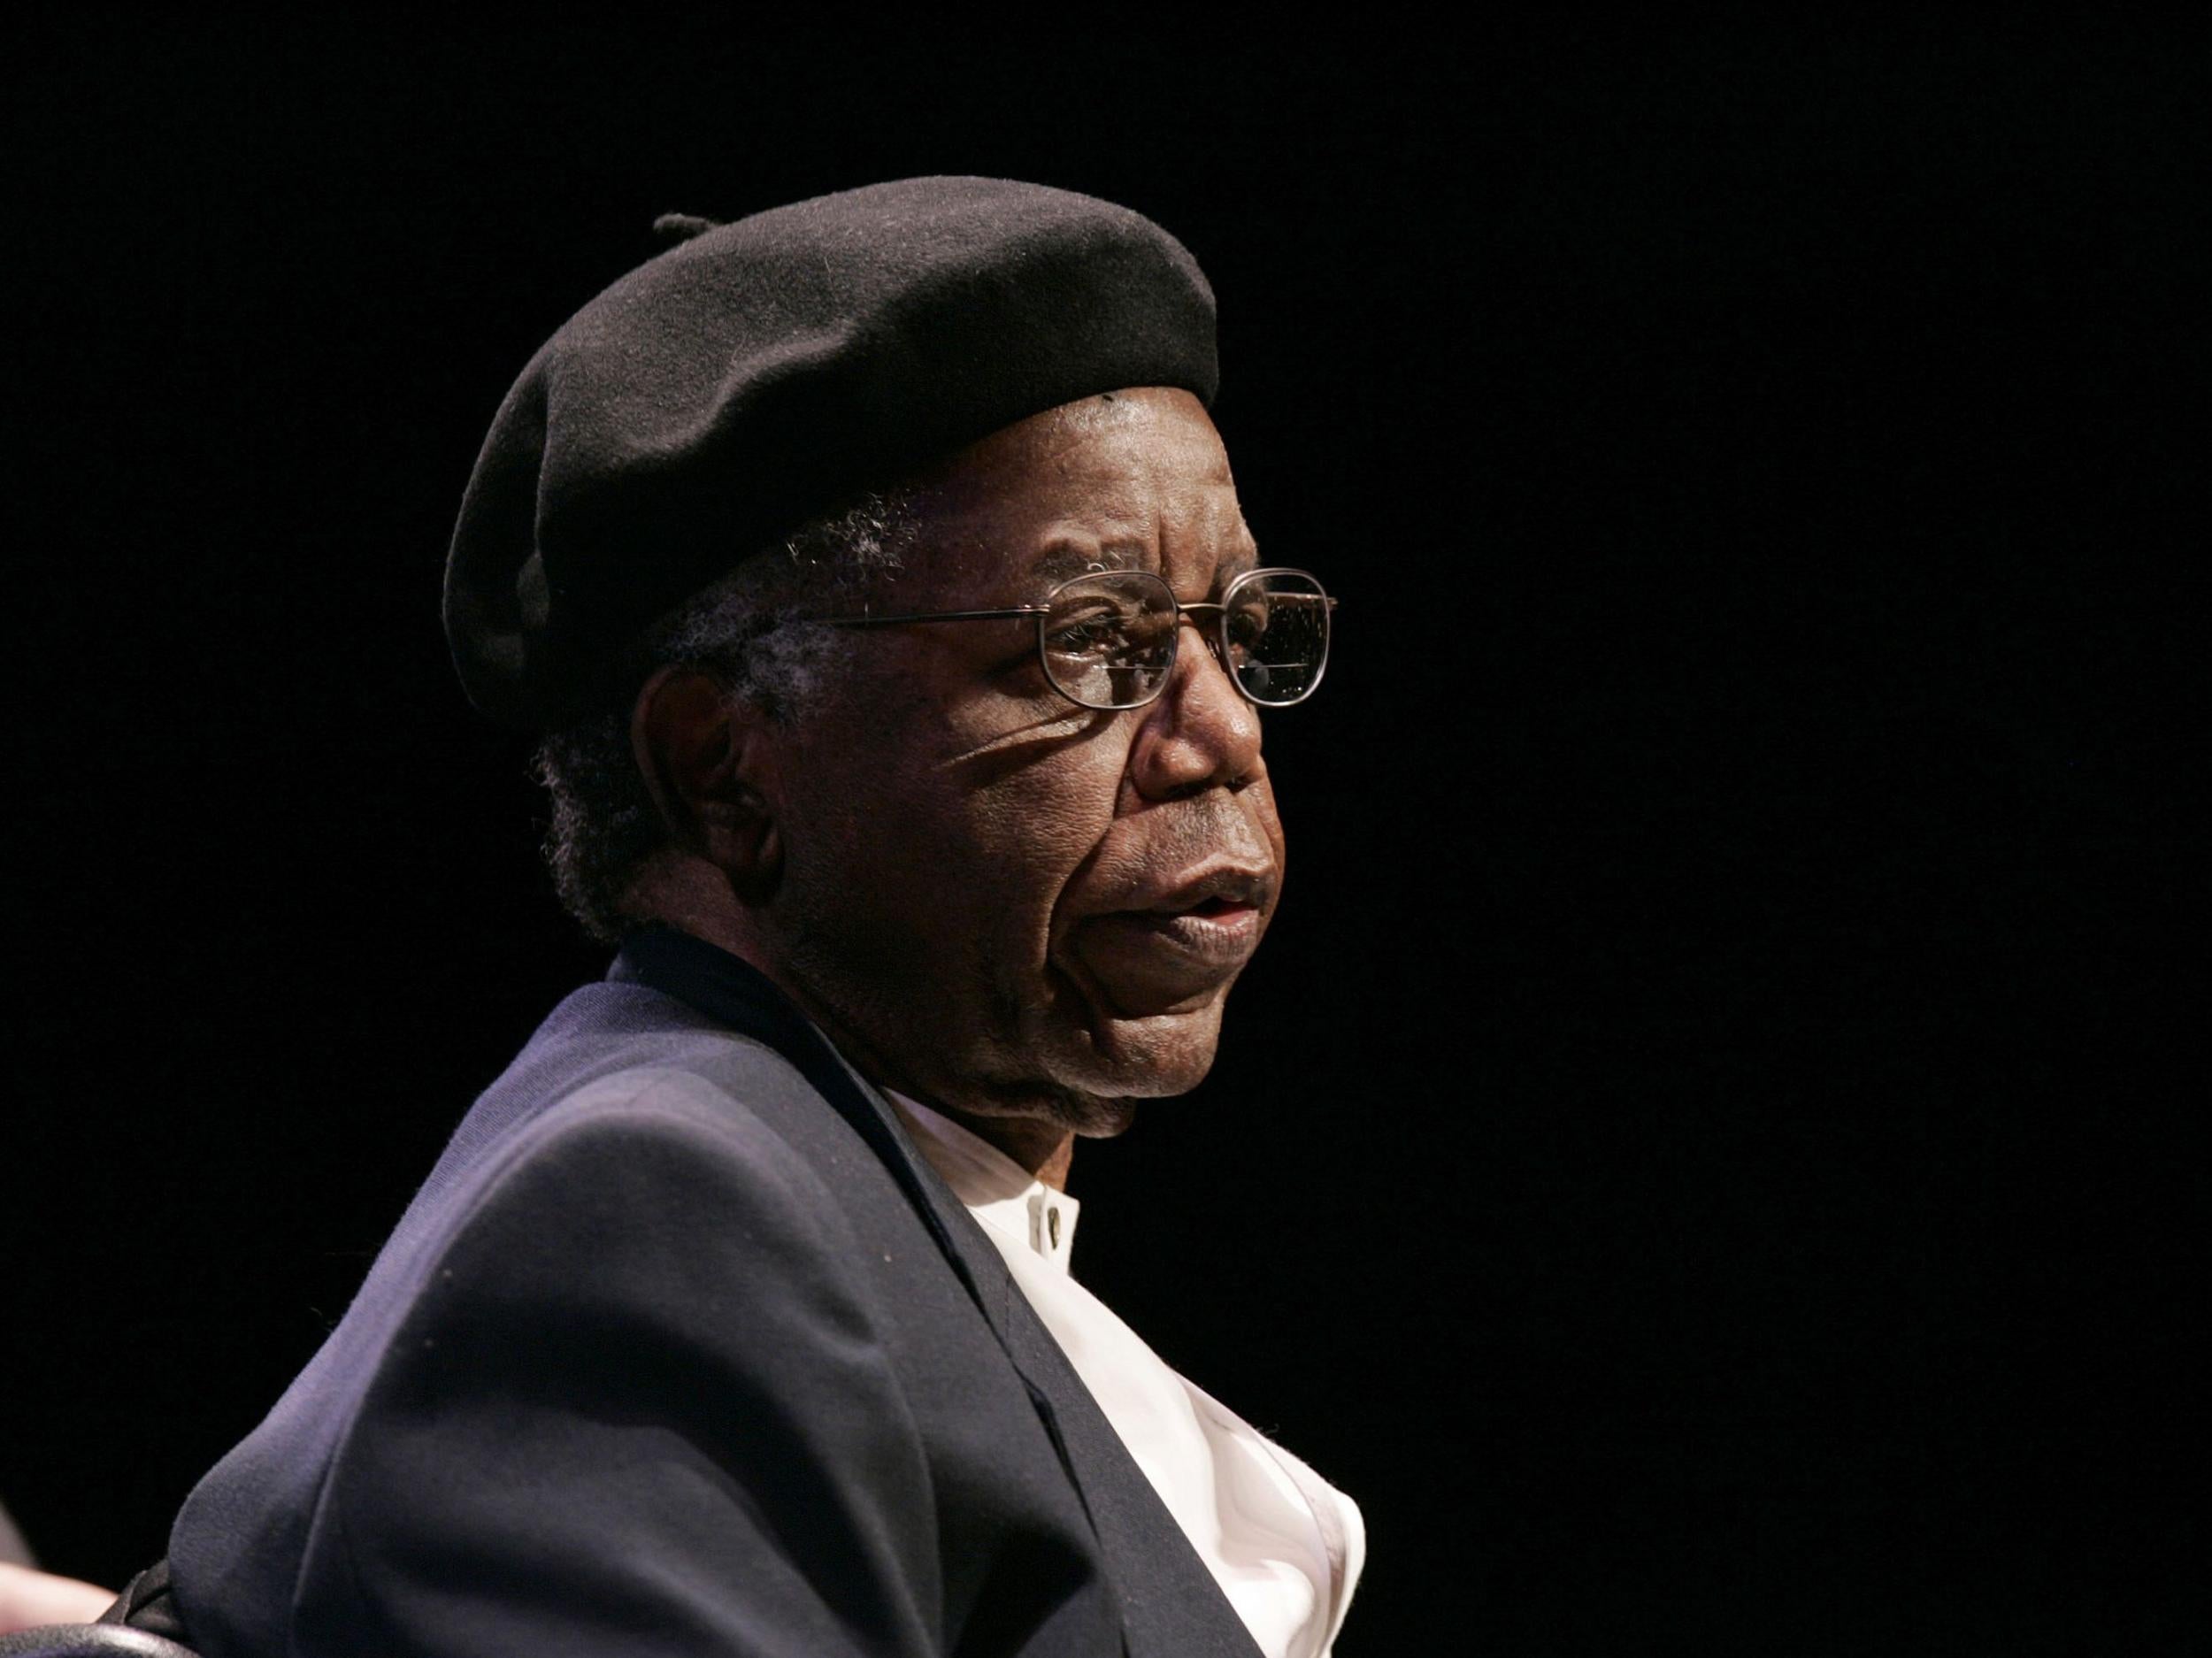 Nigerian novelist Chinua Achebe helped revive African literature